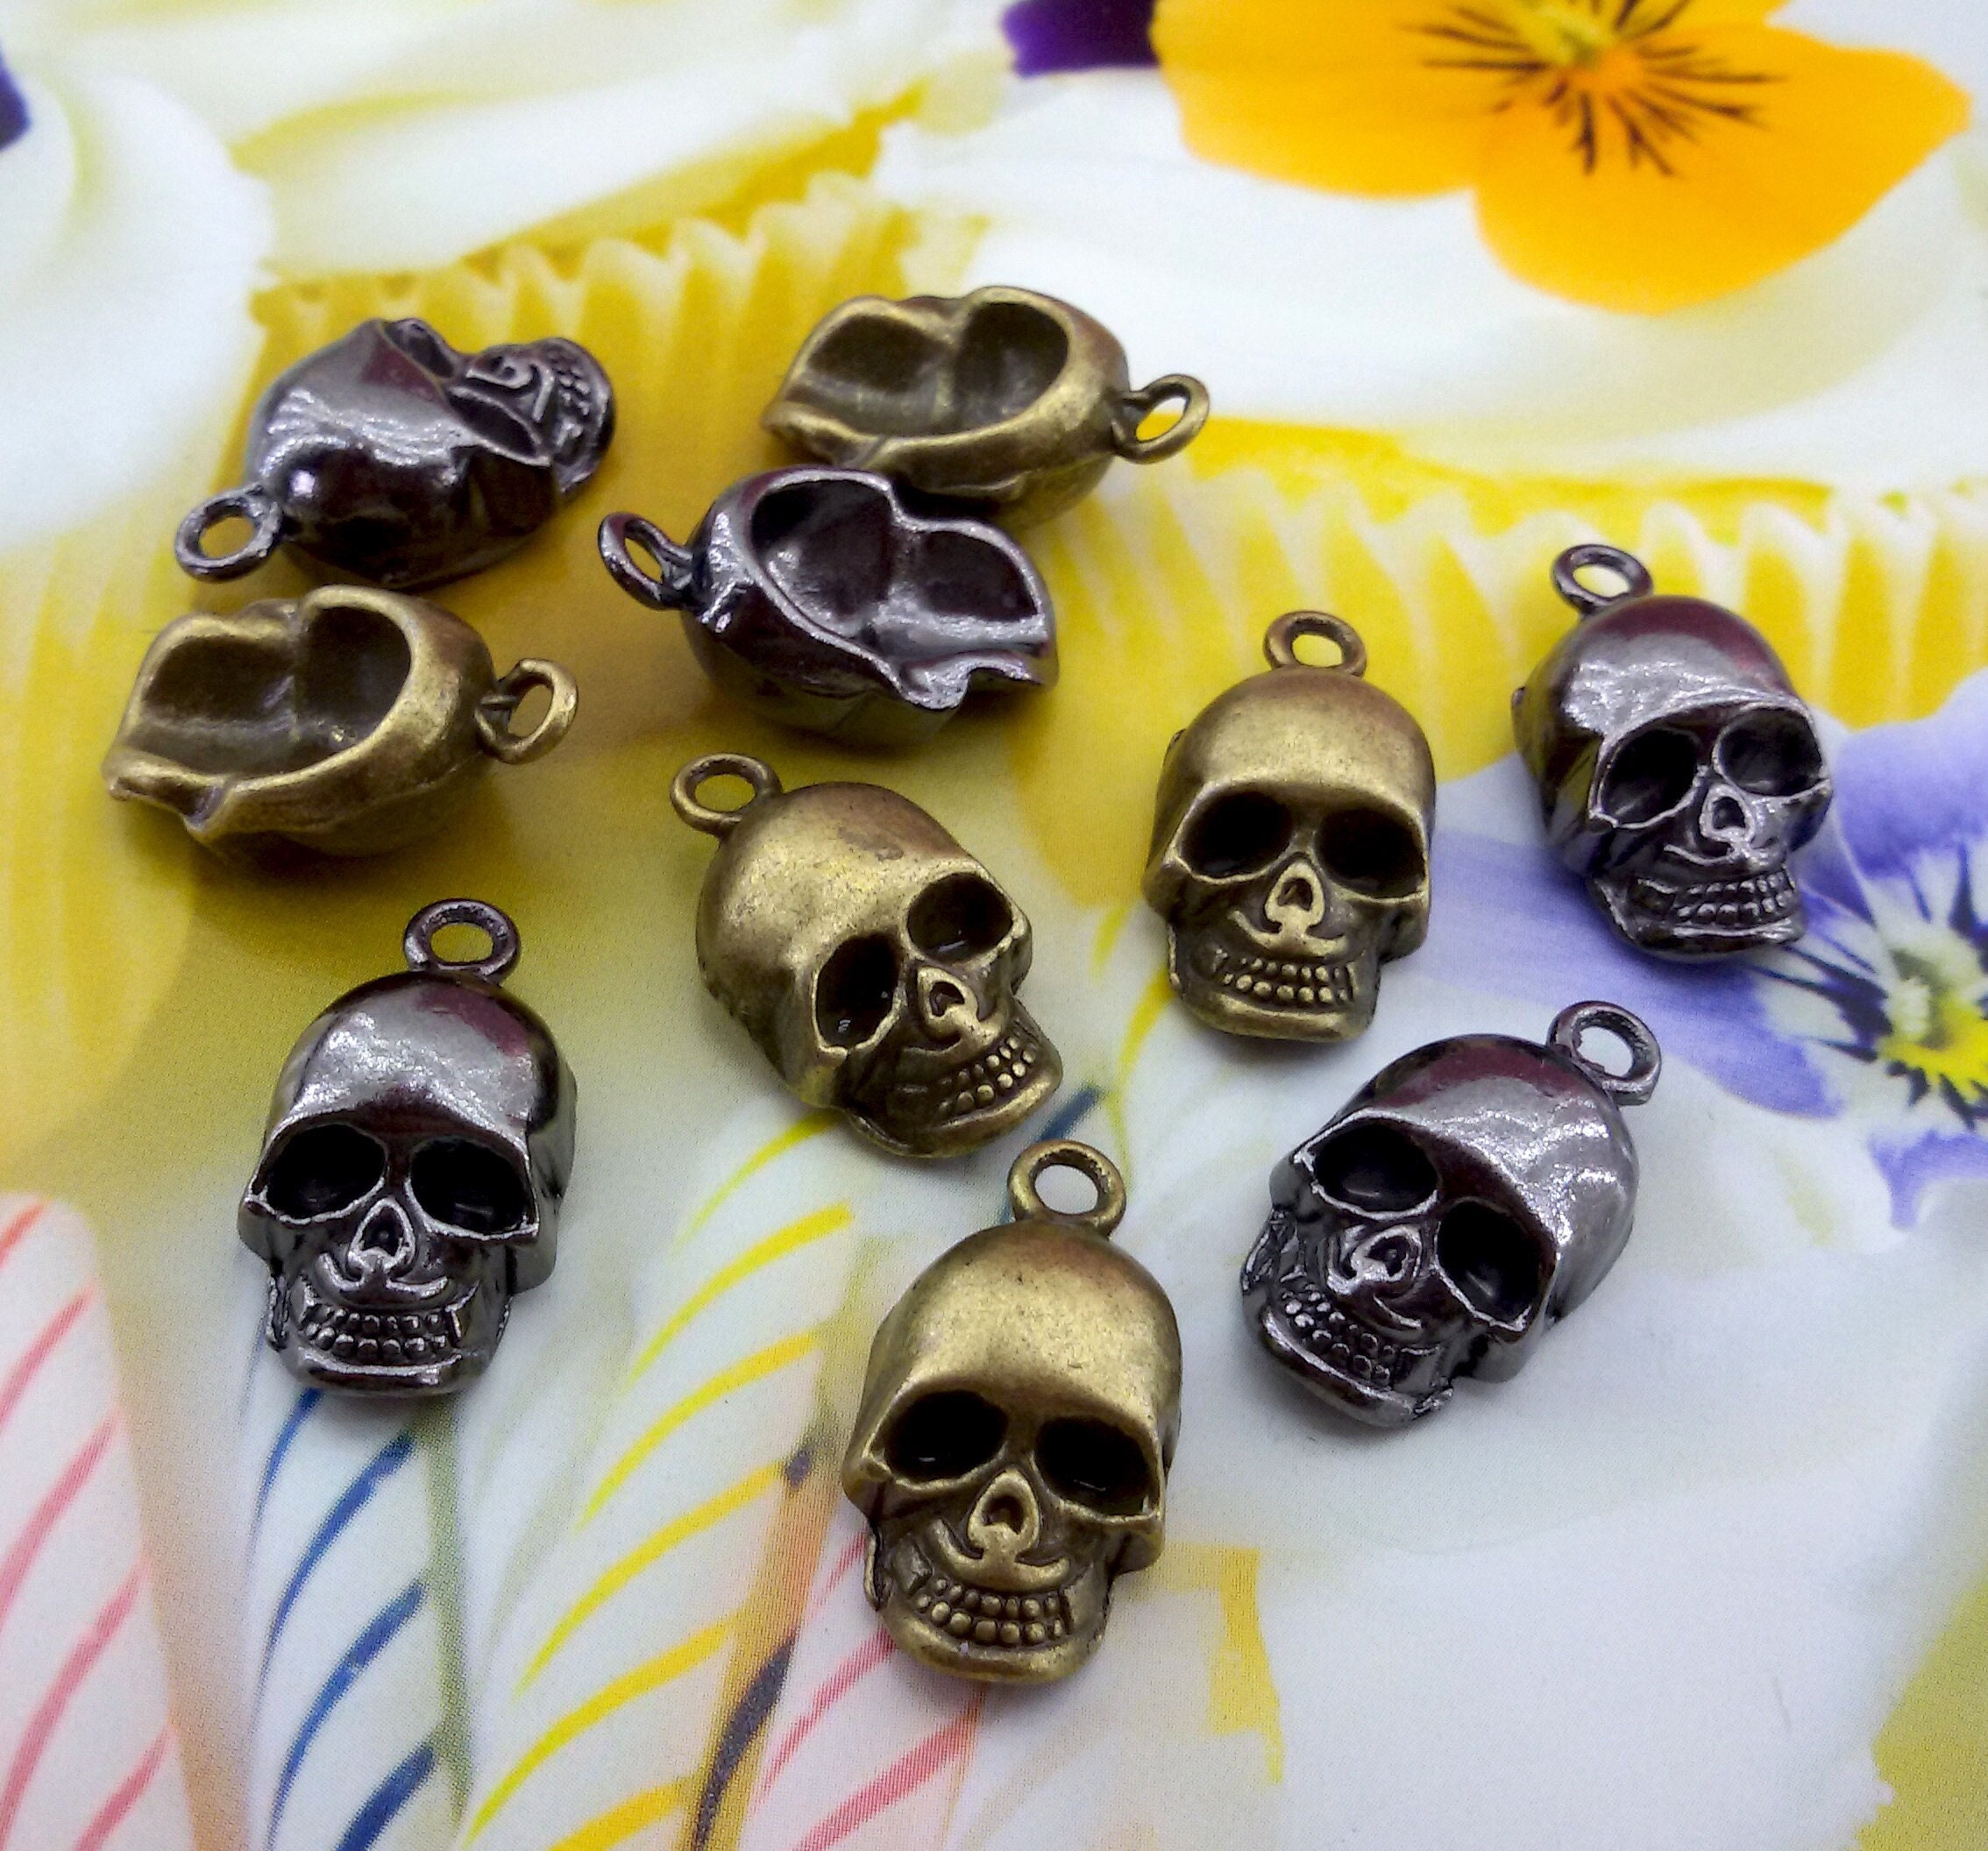 10pcs/lot Halloween Skull Design Black Rhinestones for Nails Art